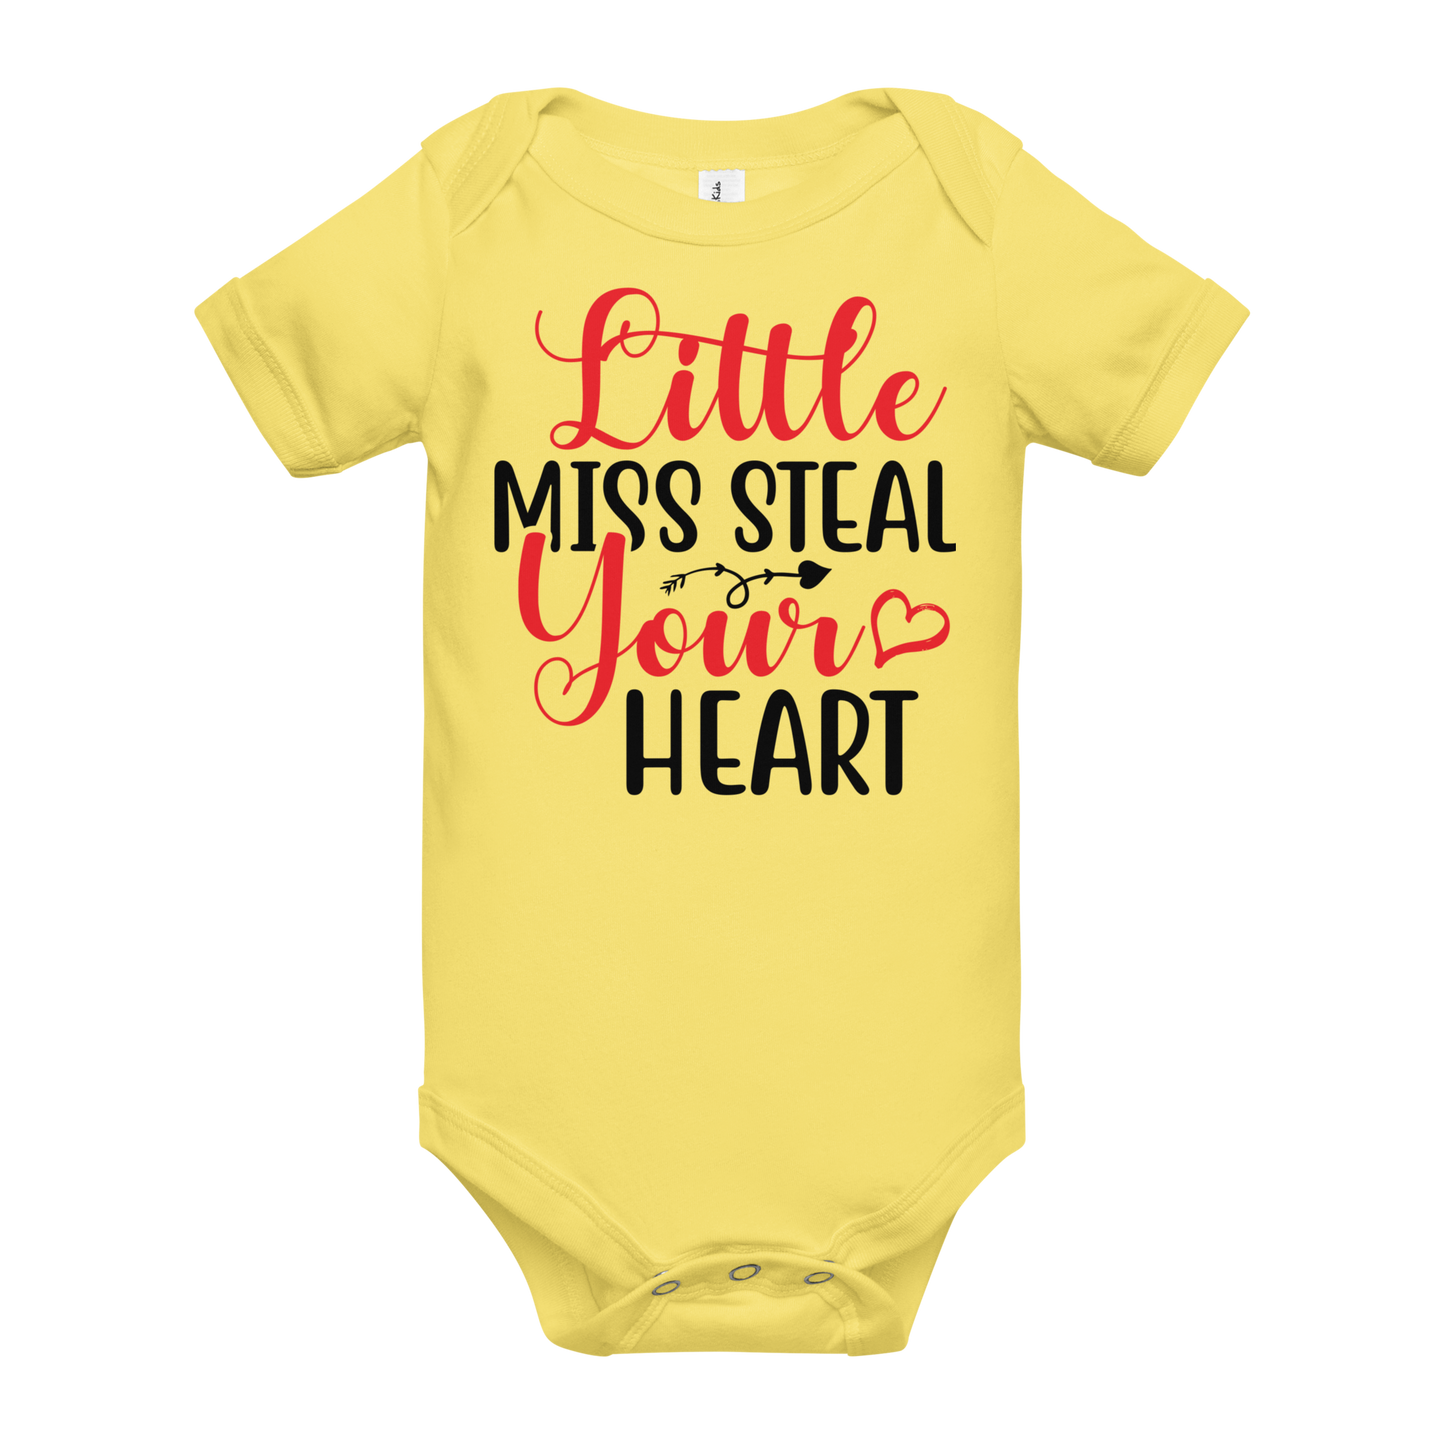 Little Miss. Steal Your Heart Baby Onesie